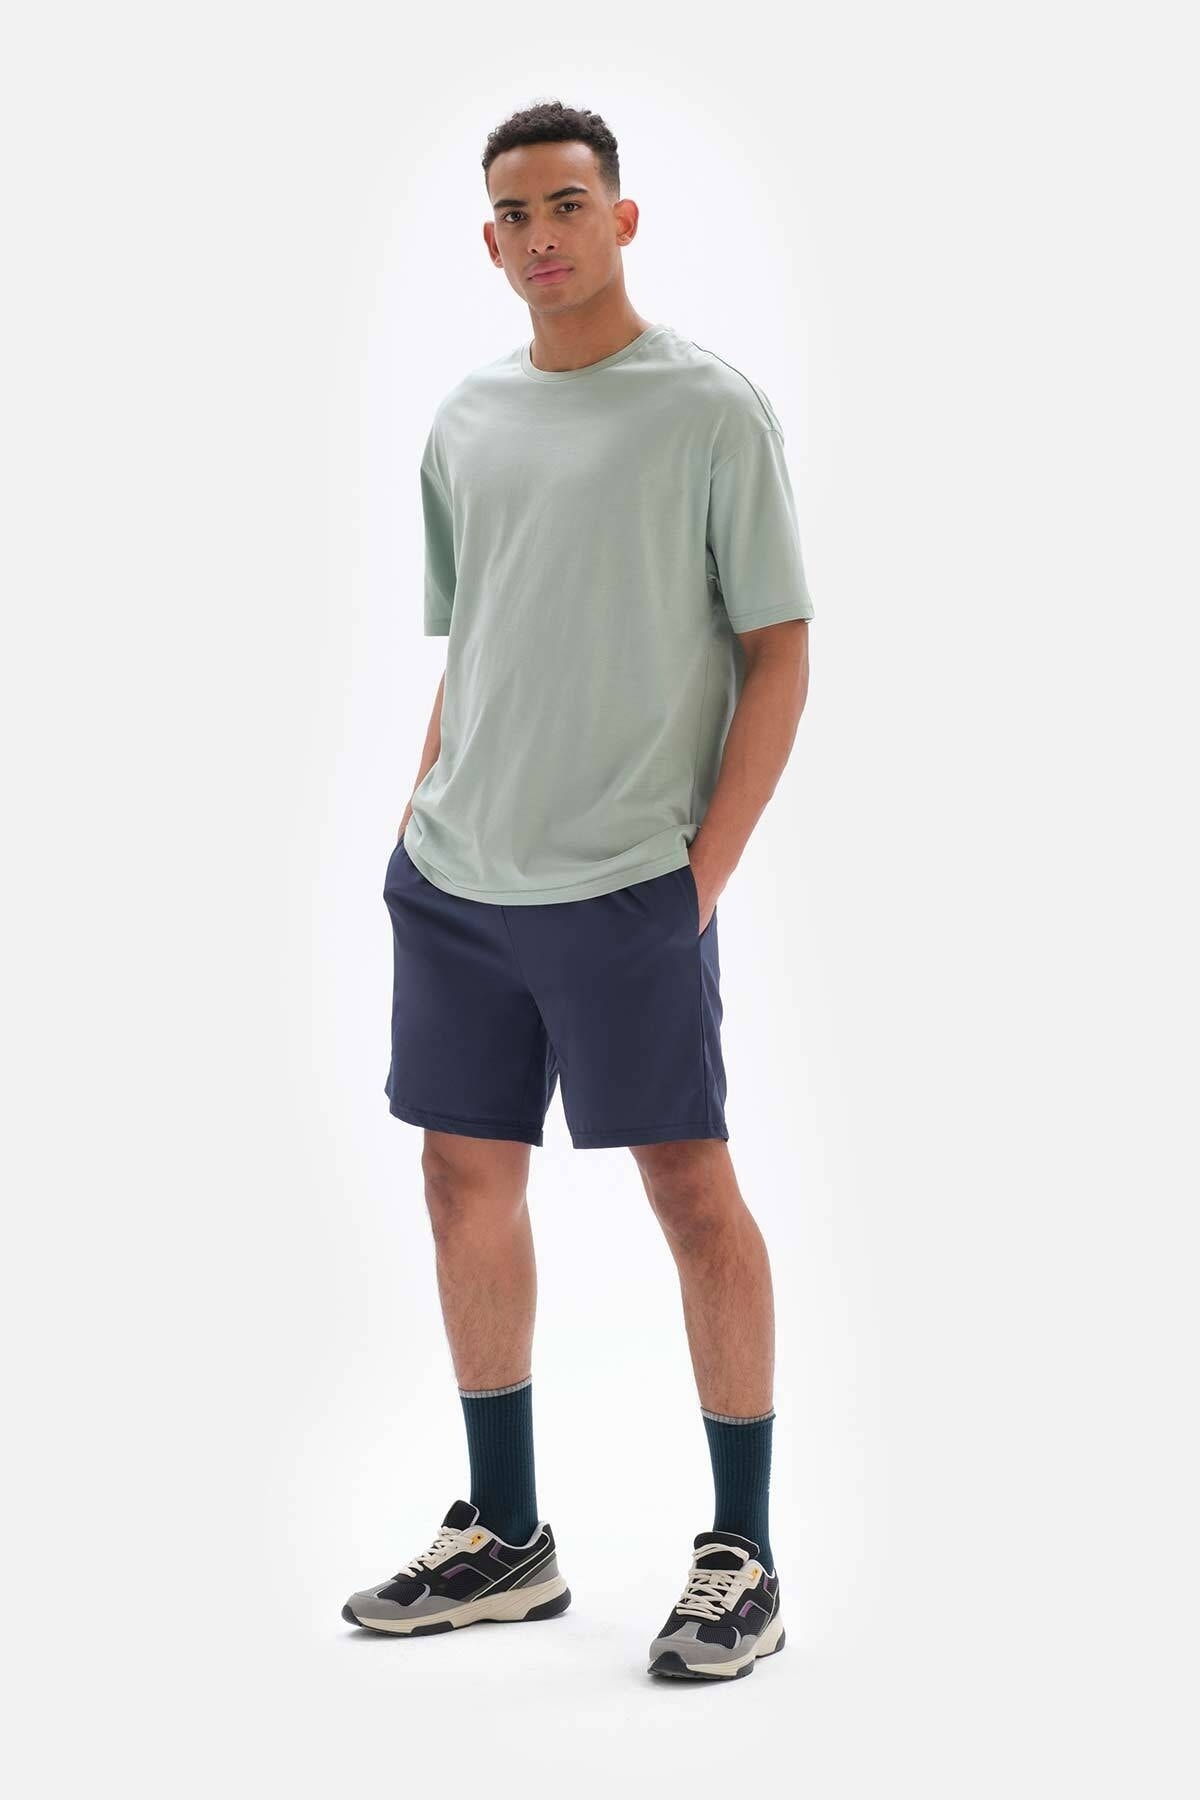 Dagi Navy Blue Men's Basic Tights Shorts